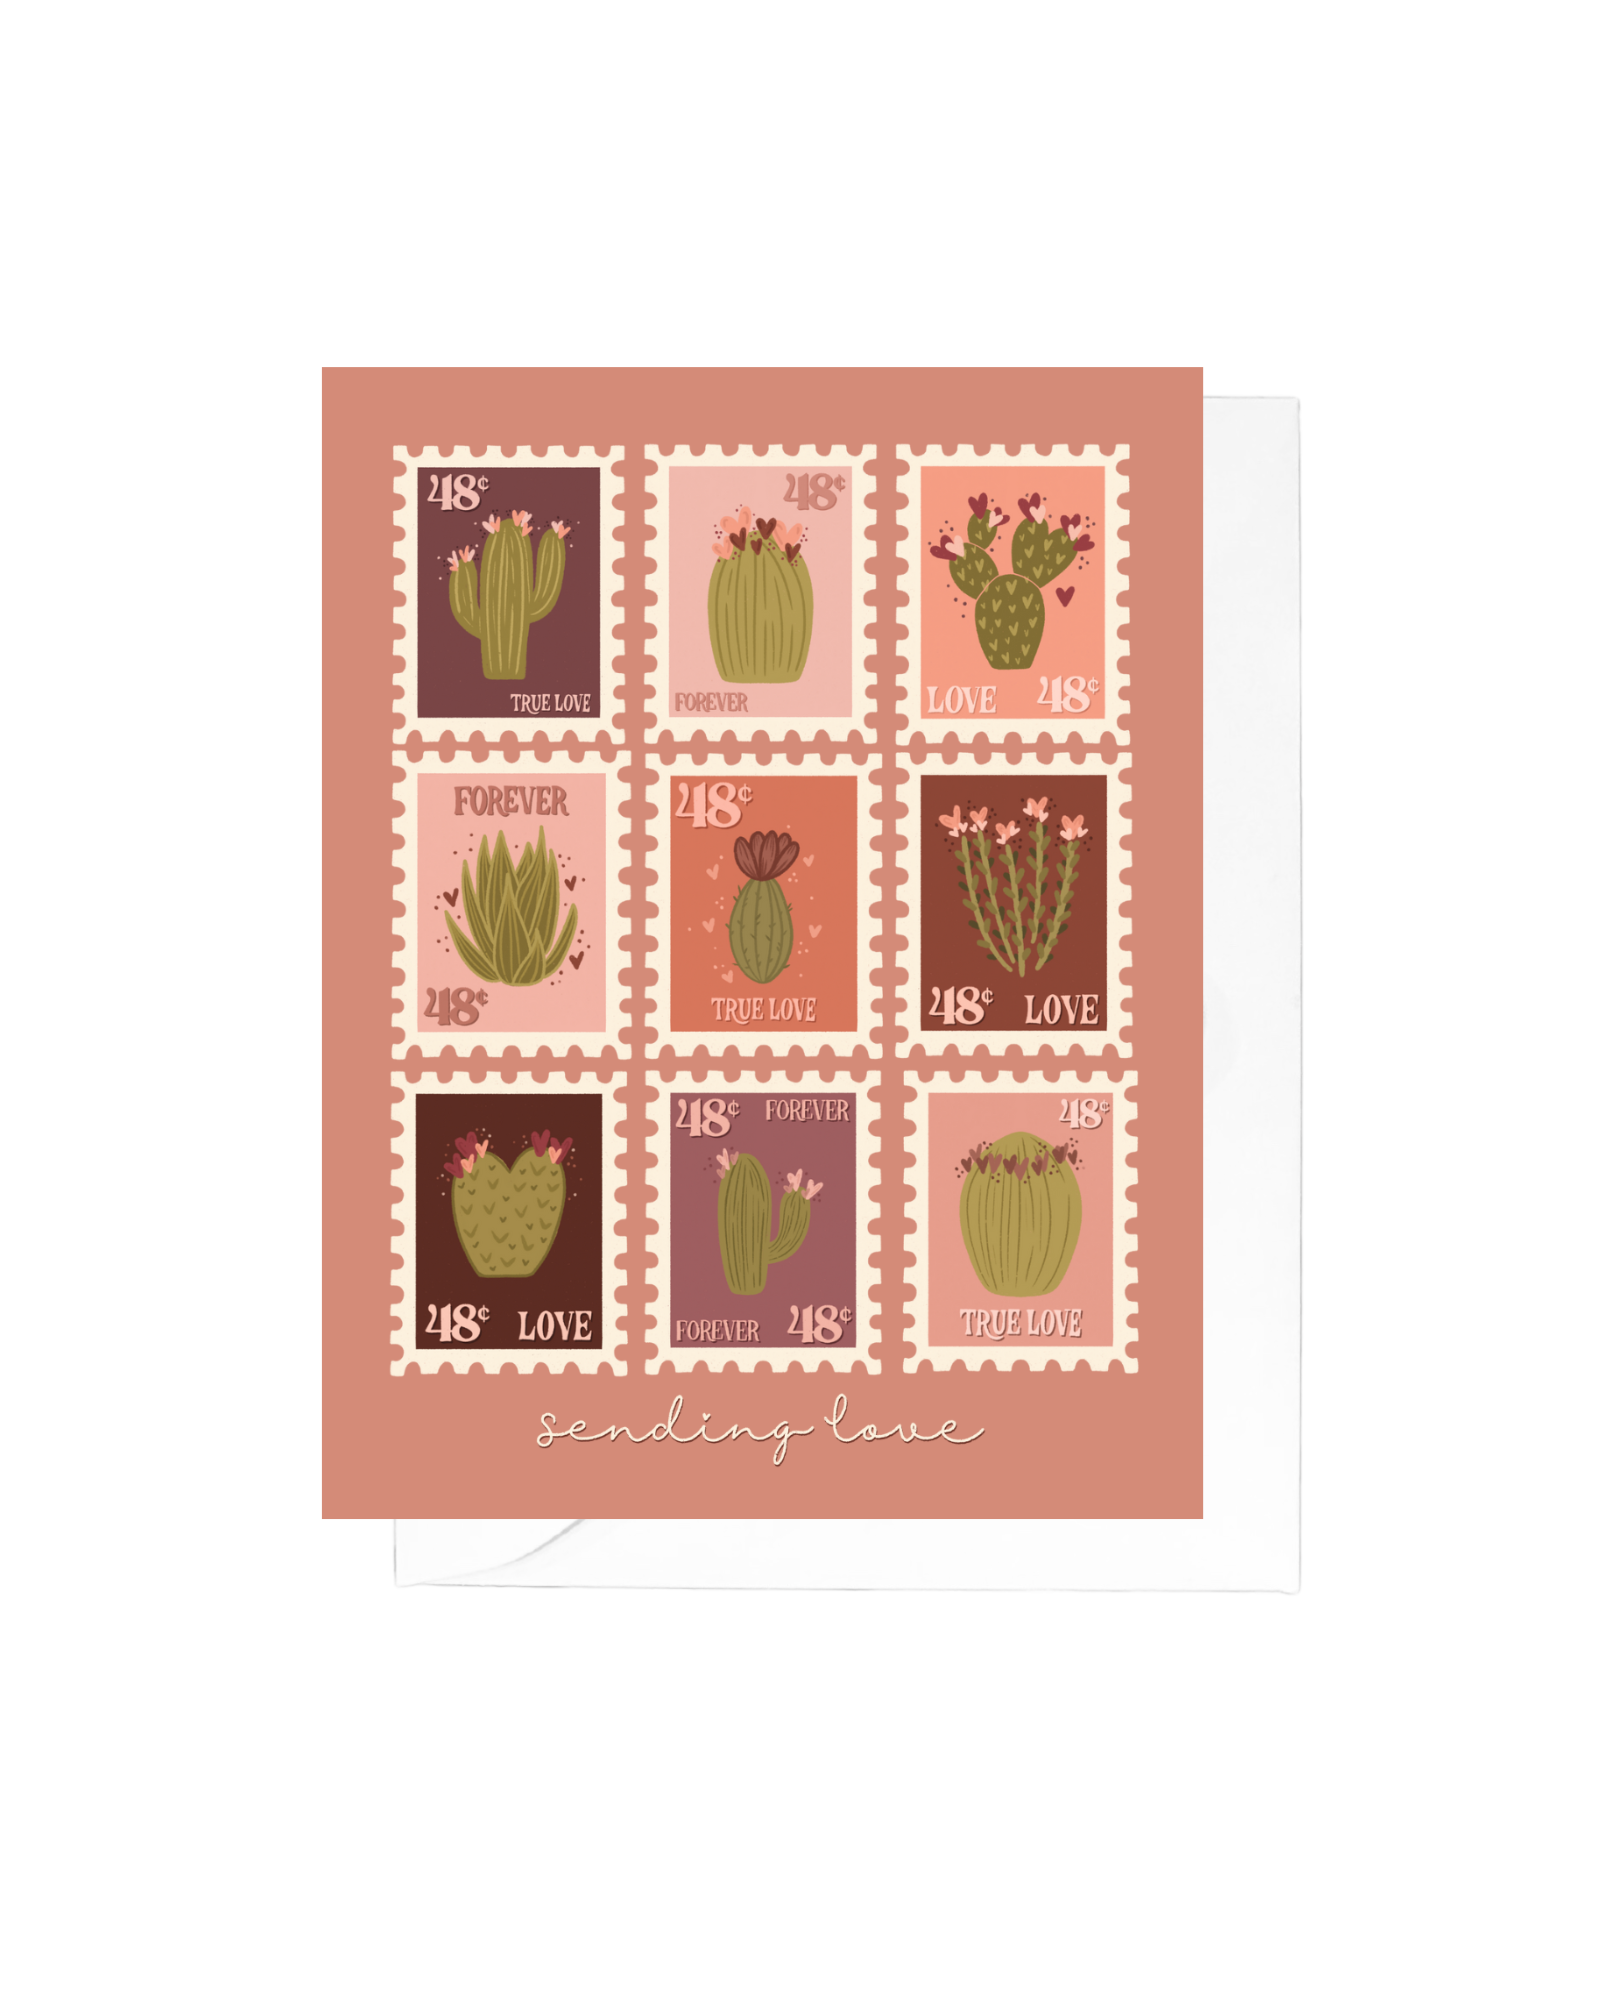 Sending Love Stamps Greeting Card